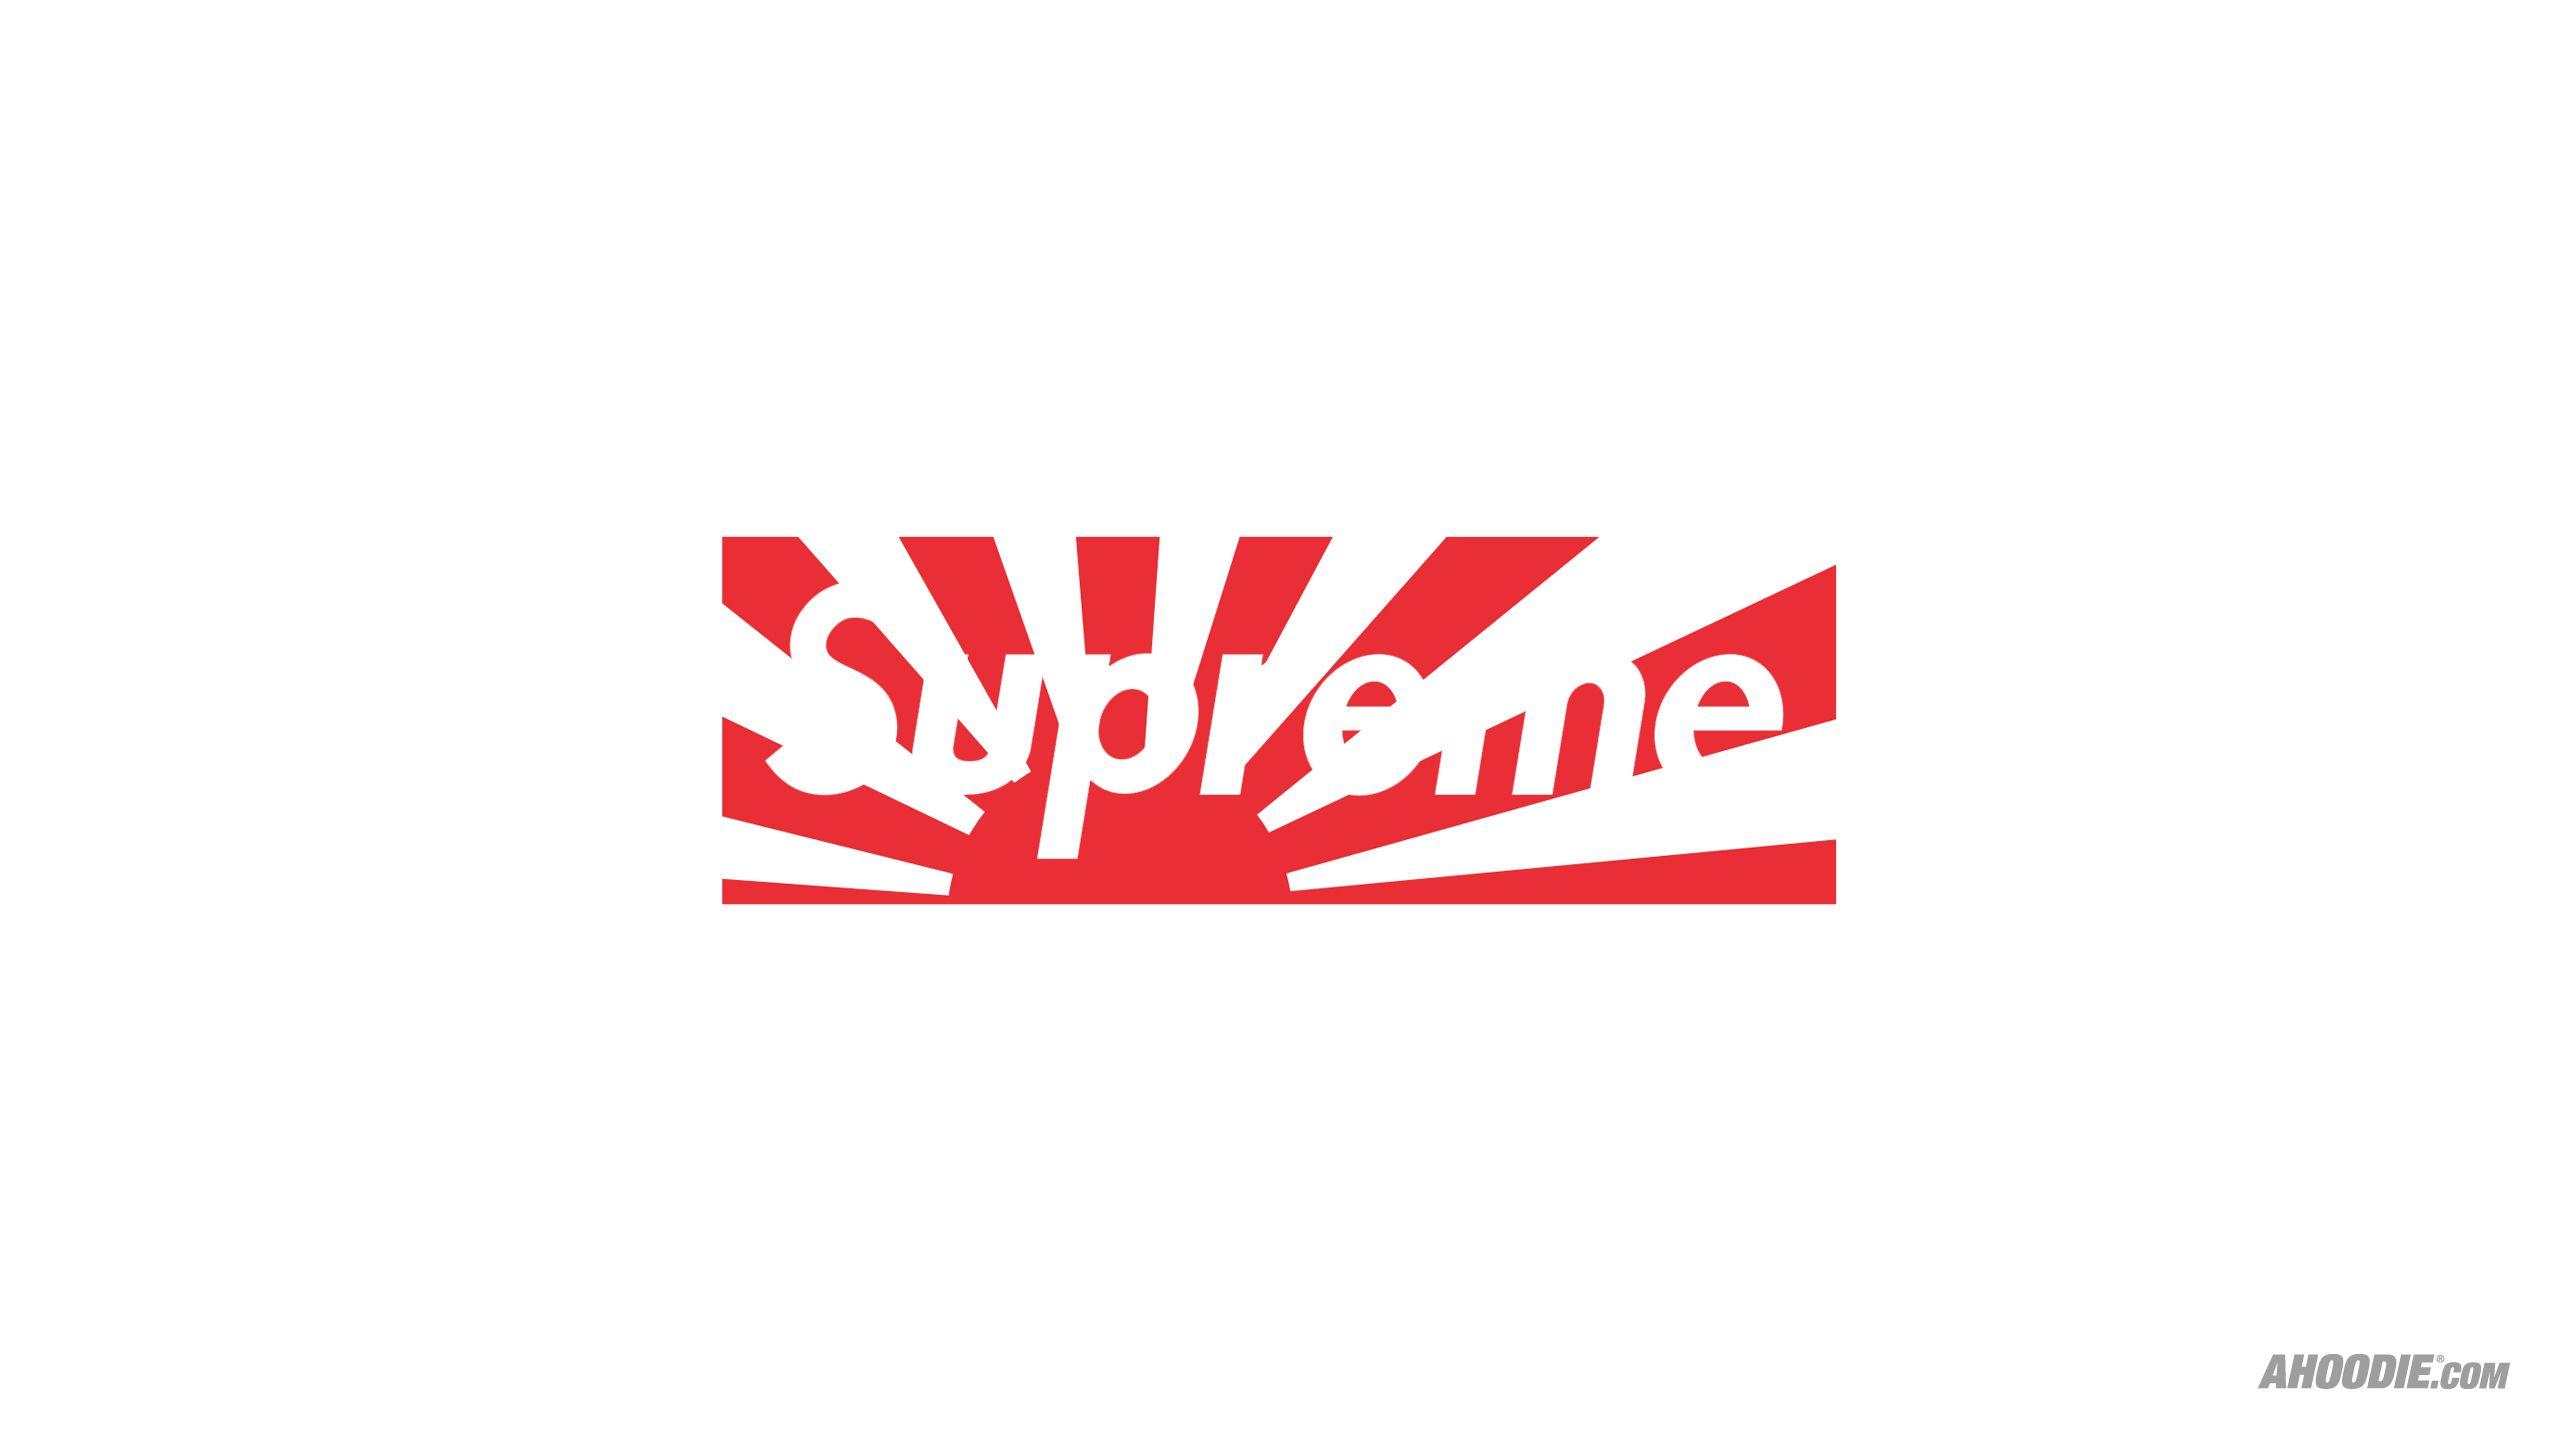 Supreme logo wallpaper Gallery